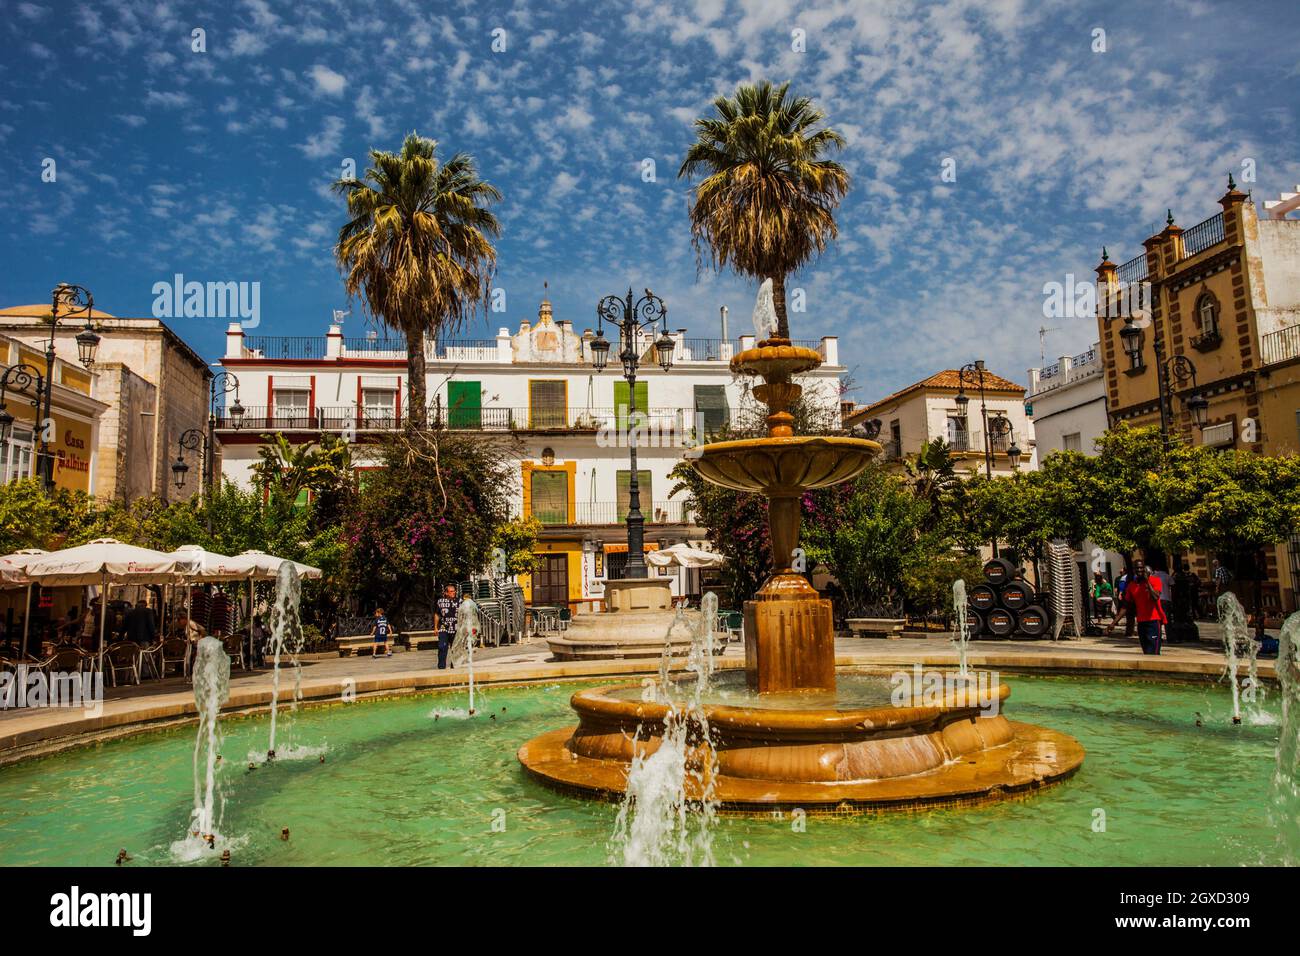 Plaza del Cabildo square, Sanlucar de Barrameda, White Towns, Pueblos Blancos, Cadiz province, Andalusia, Spain, Europe. Stock Photo